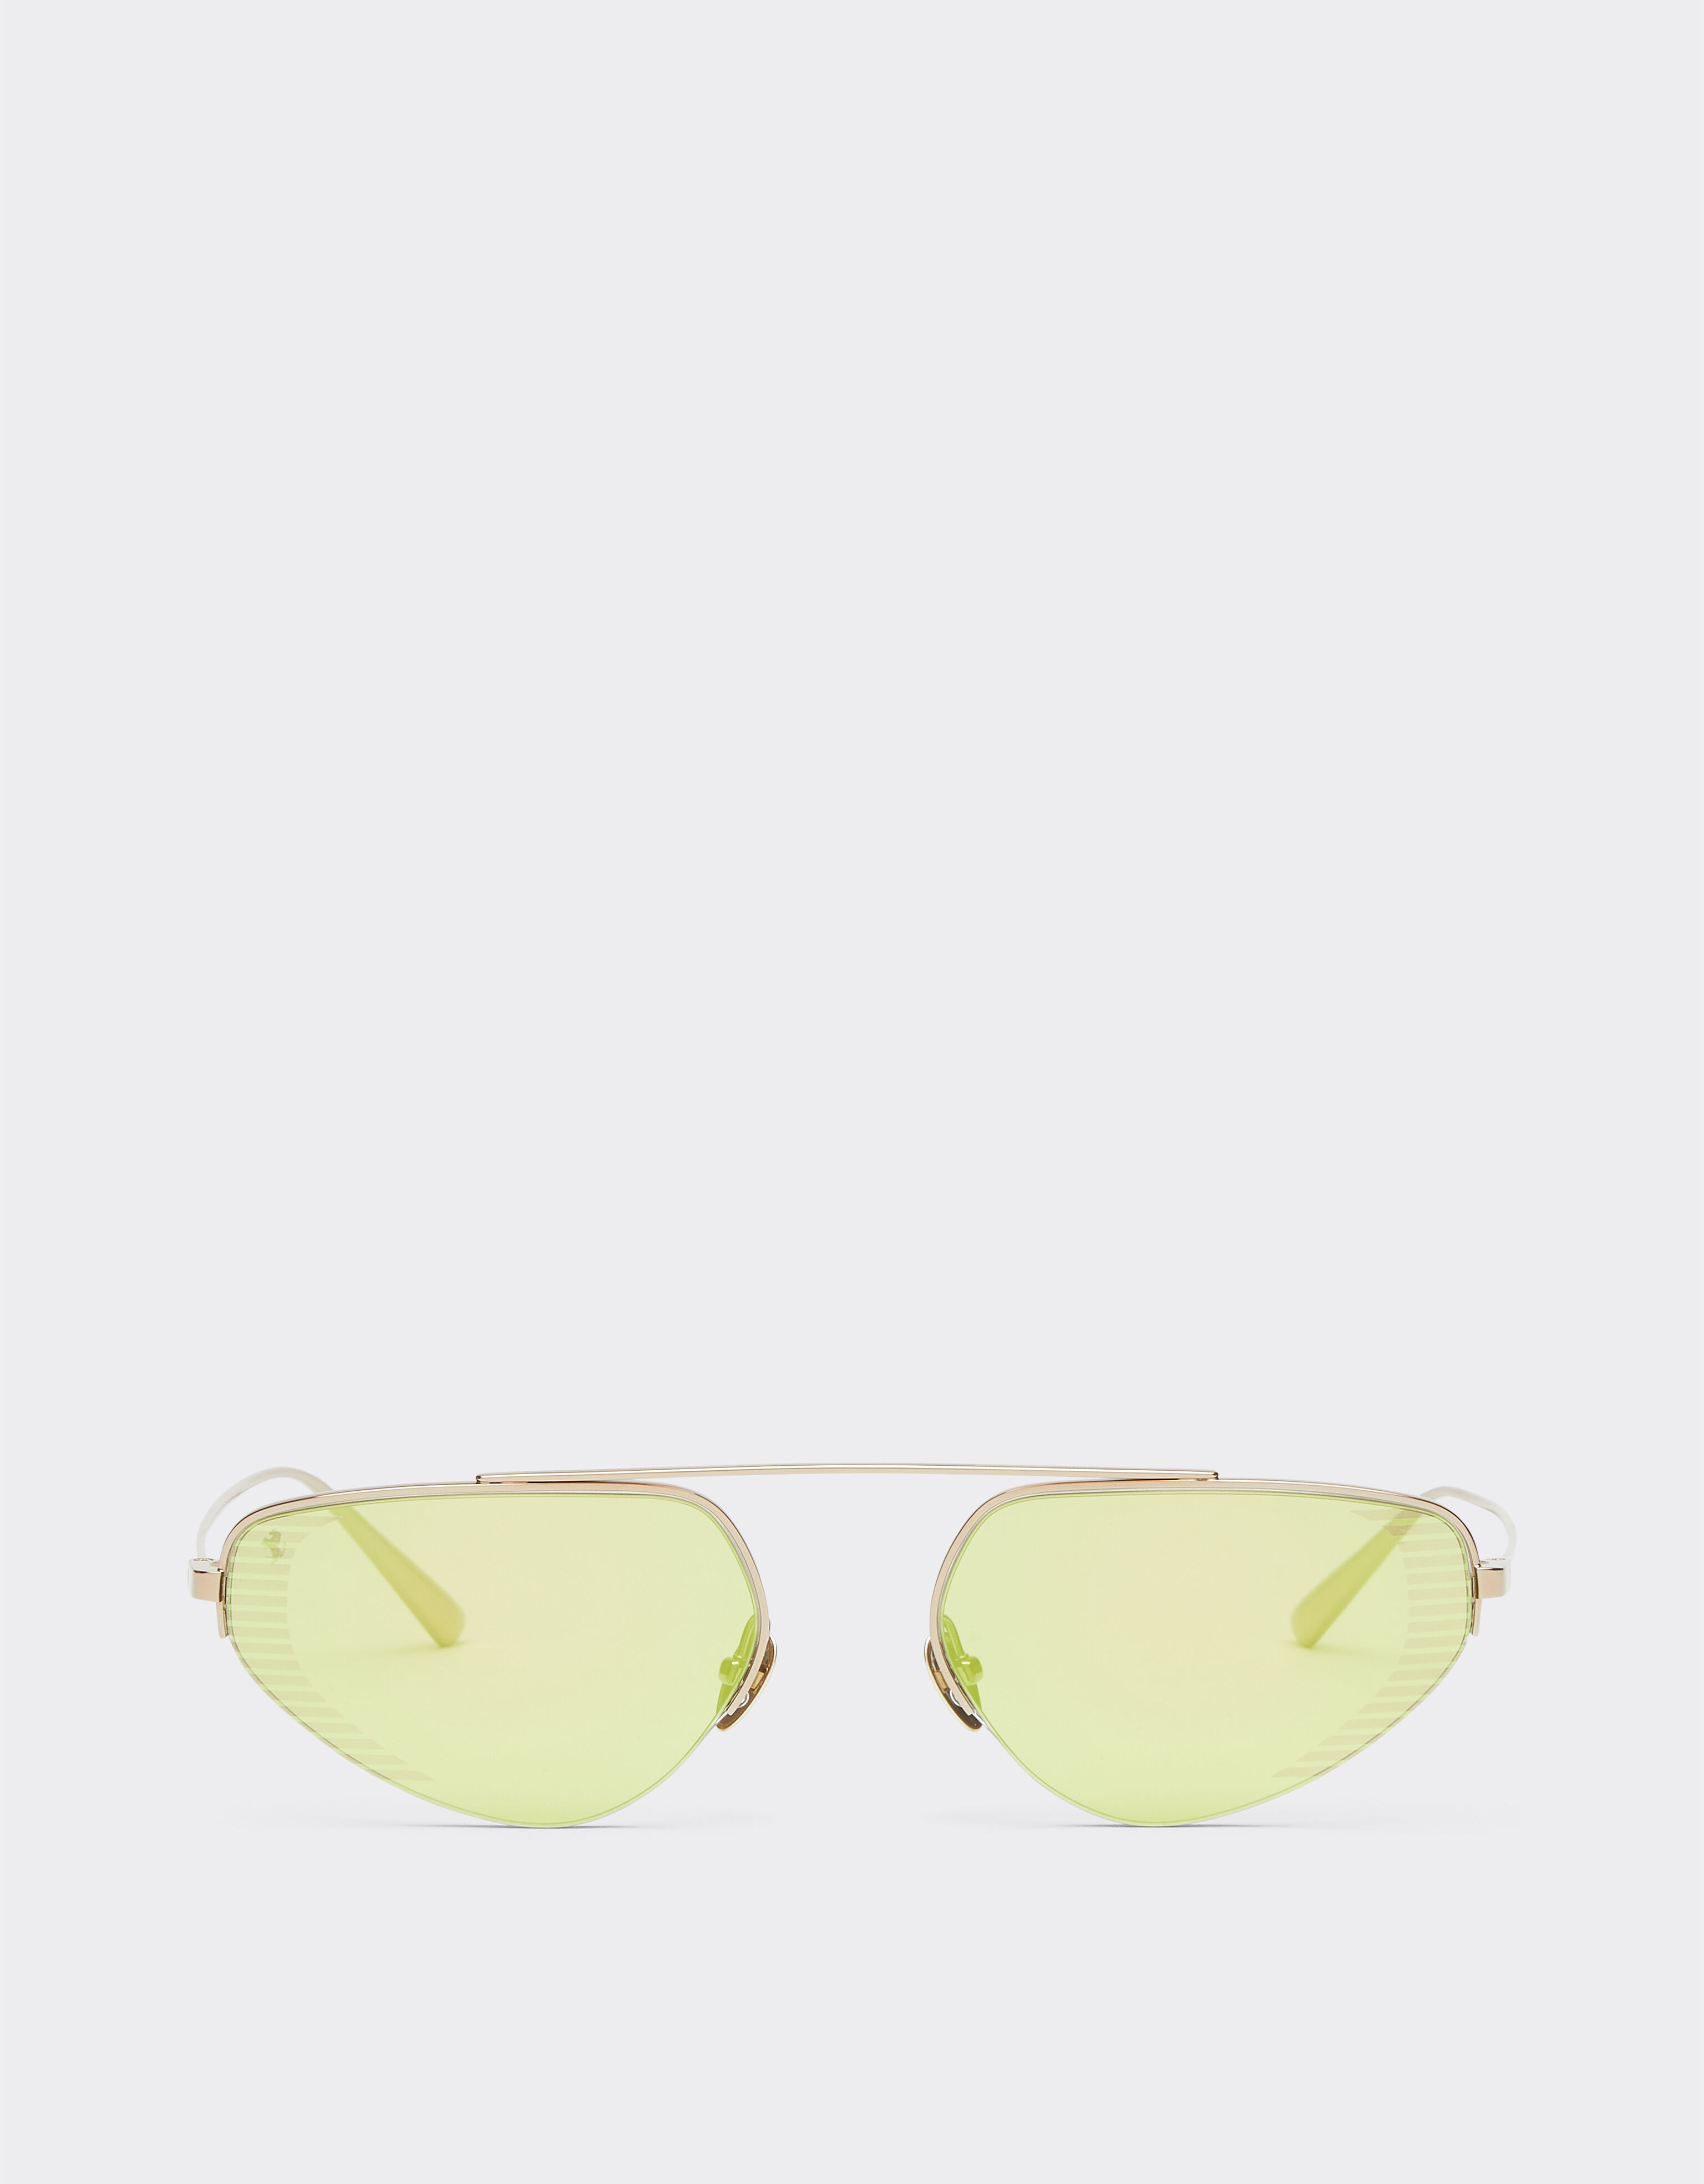 Ferrari Ferrari sunglasses in gold-tone titanium with green mirror lenses Black Matt F1250f